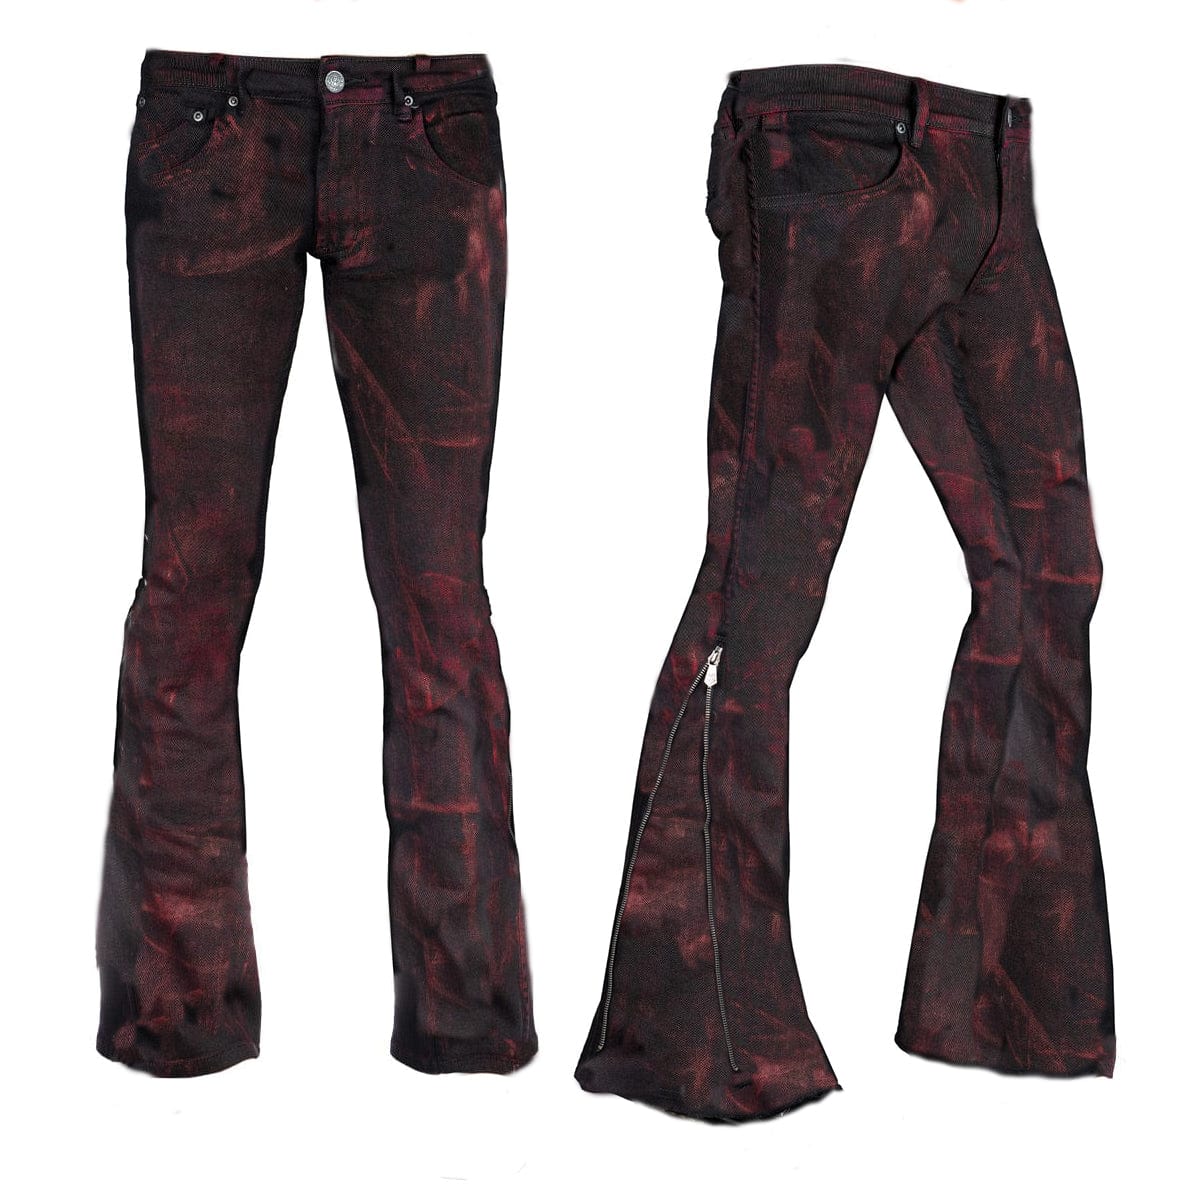 Custom Chop Shop Pants Wornstar Custom Jeans - Black Cherry Bomb Alloy Washed Side Zipper